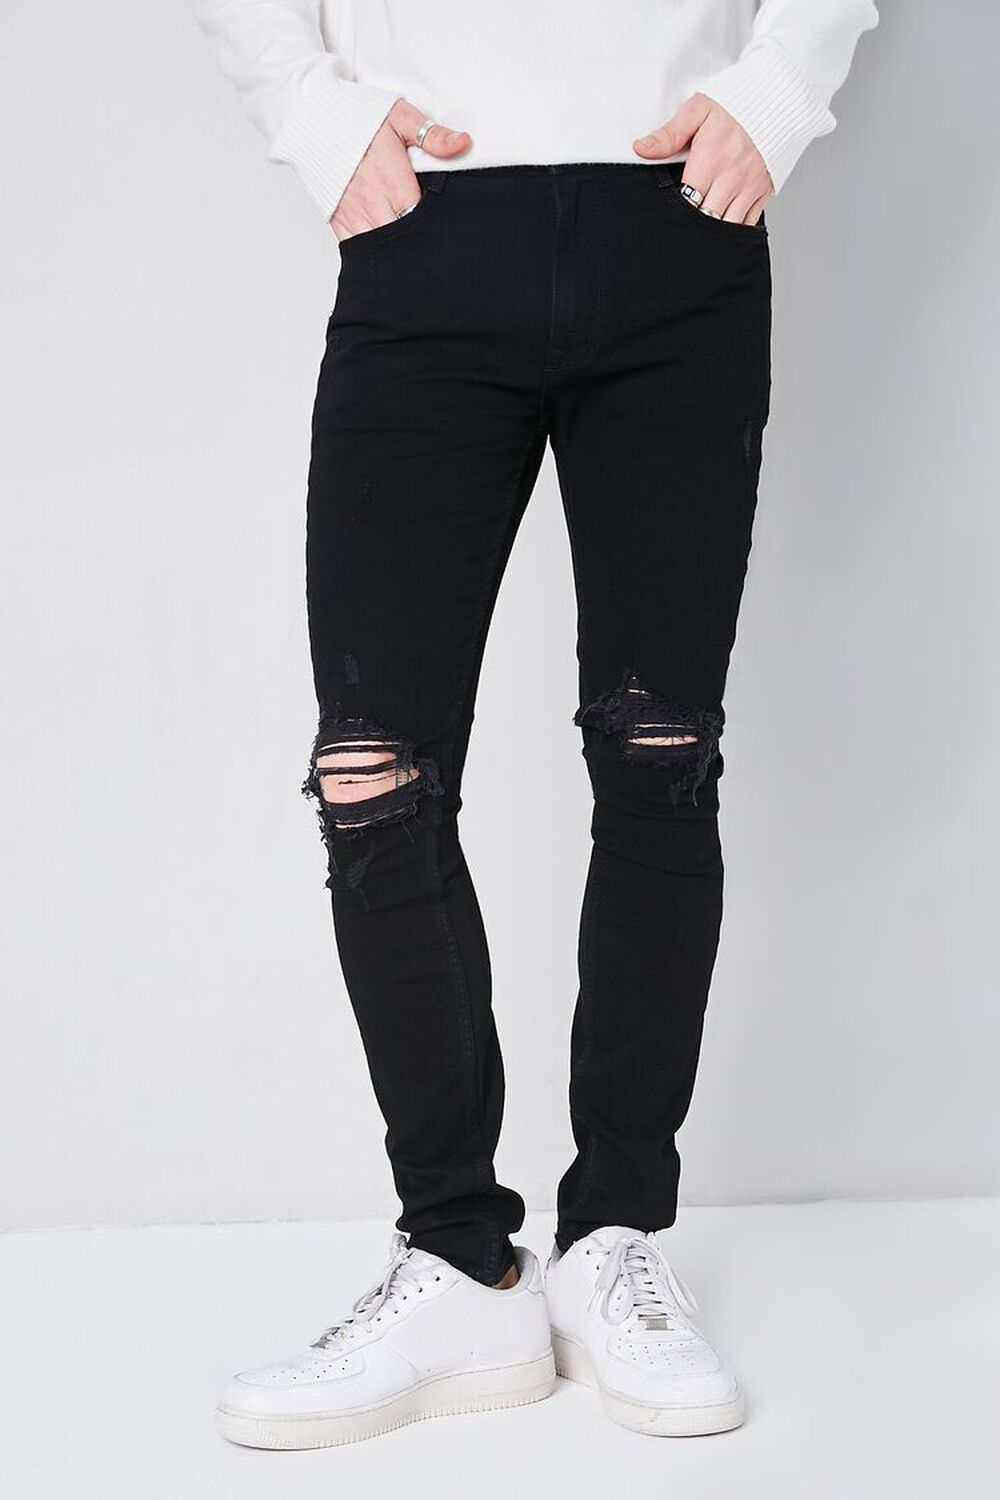 BLACK Premium Distressed Skinny Jeans, image 2